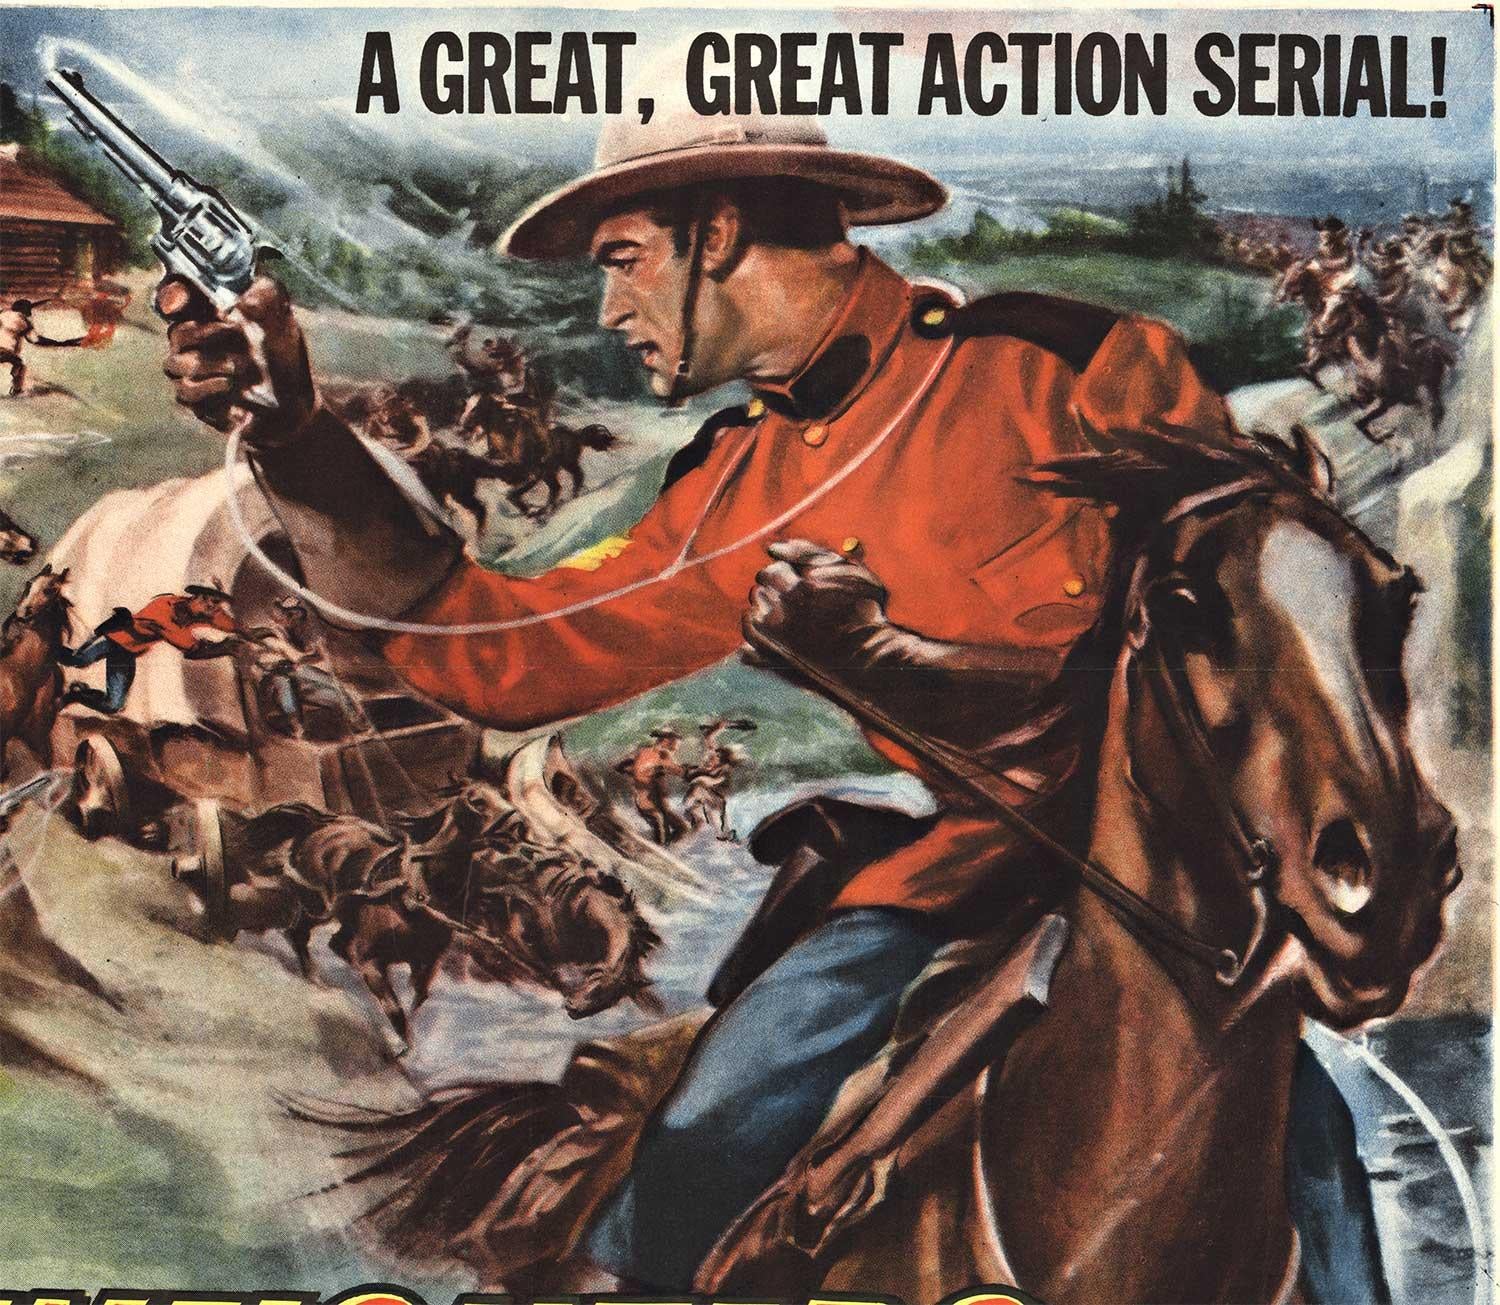 'Gunfighters of the Northwest' original vintage movie poster  1954  US 1-sheet - Print by Unknown